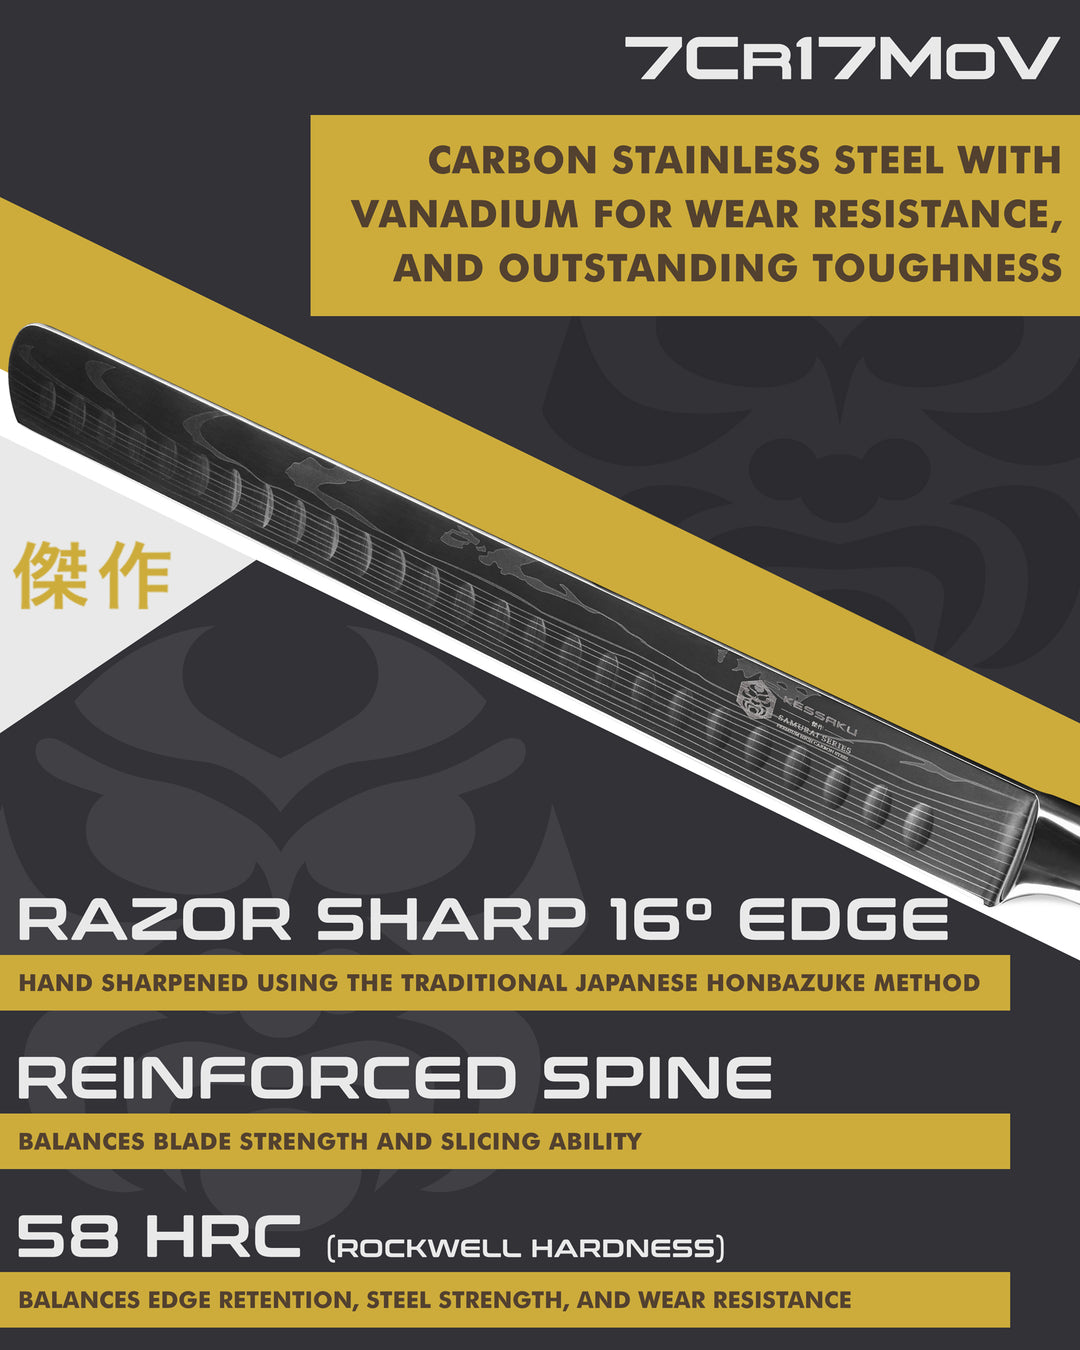 Kessaku Samurai Carving Knife blade features: 7Cr17MoV steel, 58 HRC, 16 degree edge, reinforced spine